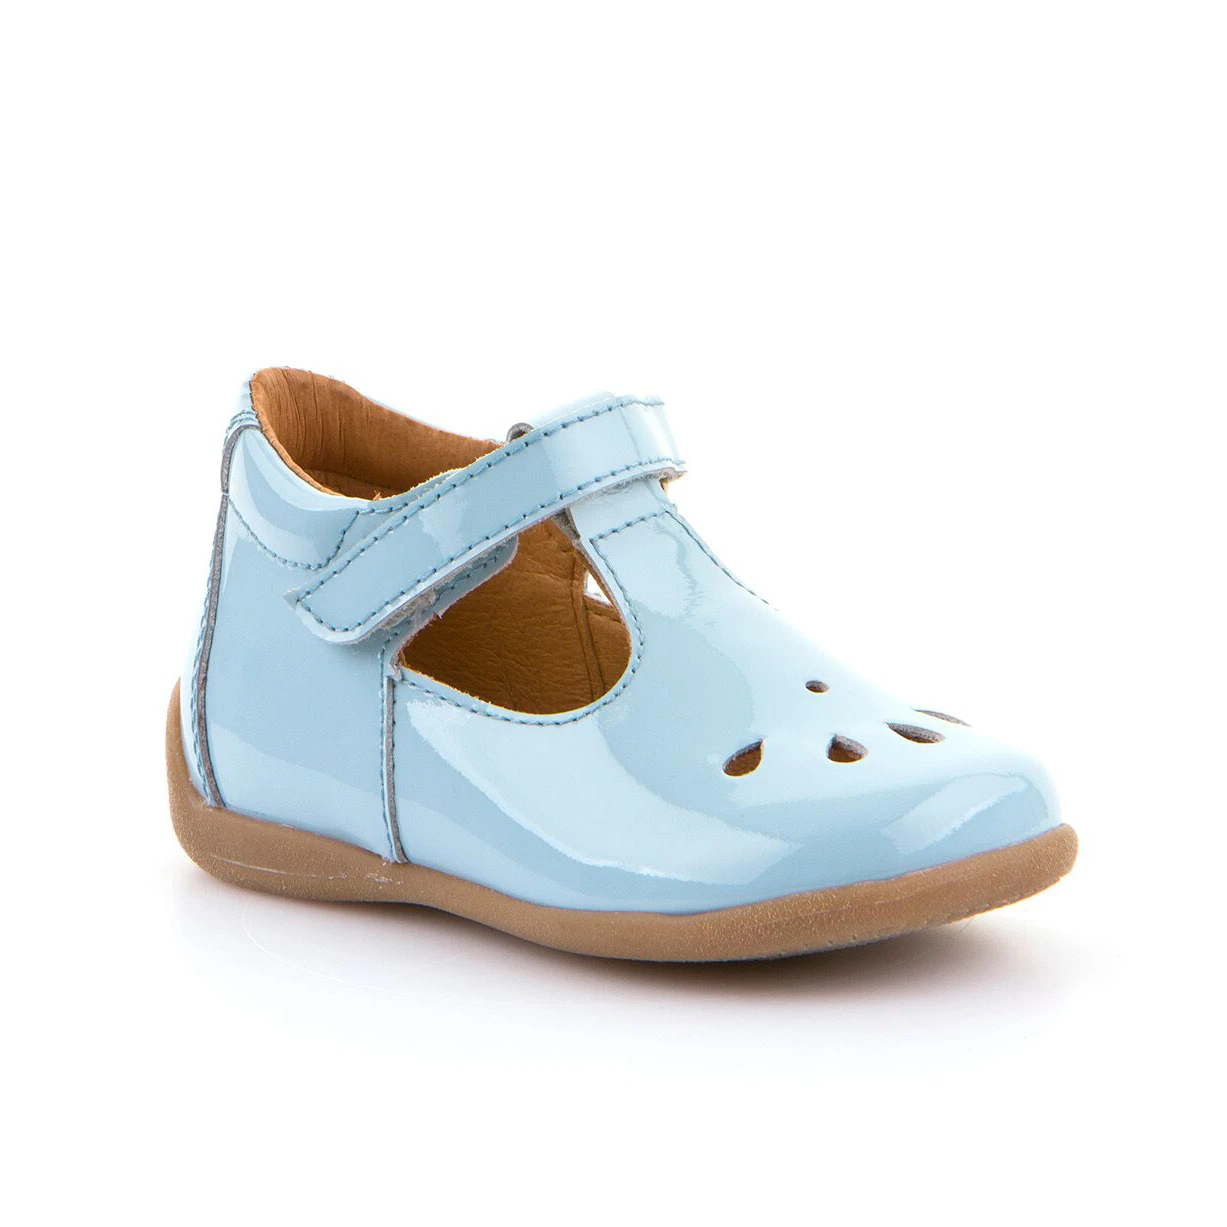 Froddo Infant Childrens T-Bar G2140035-5 Leather Shoes Light Blue